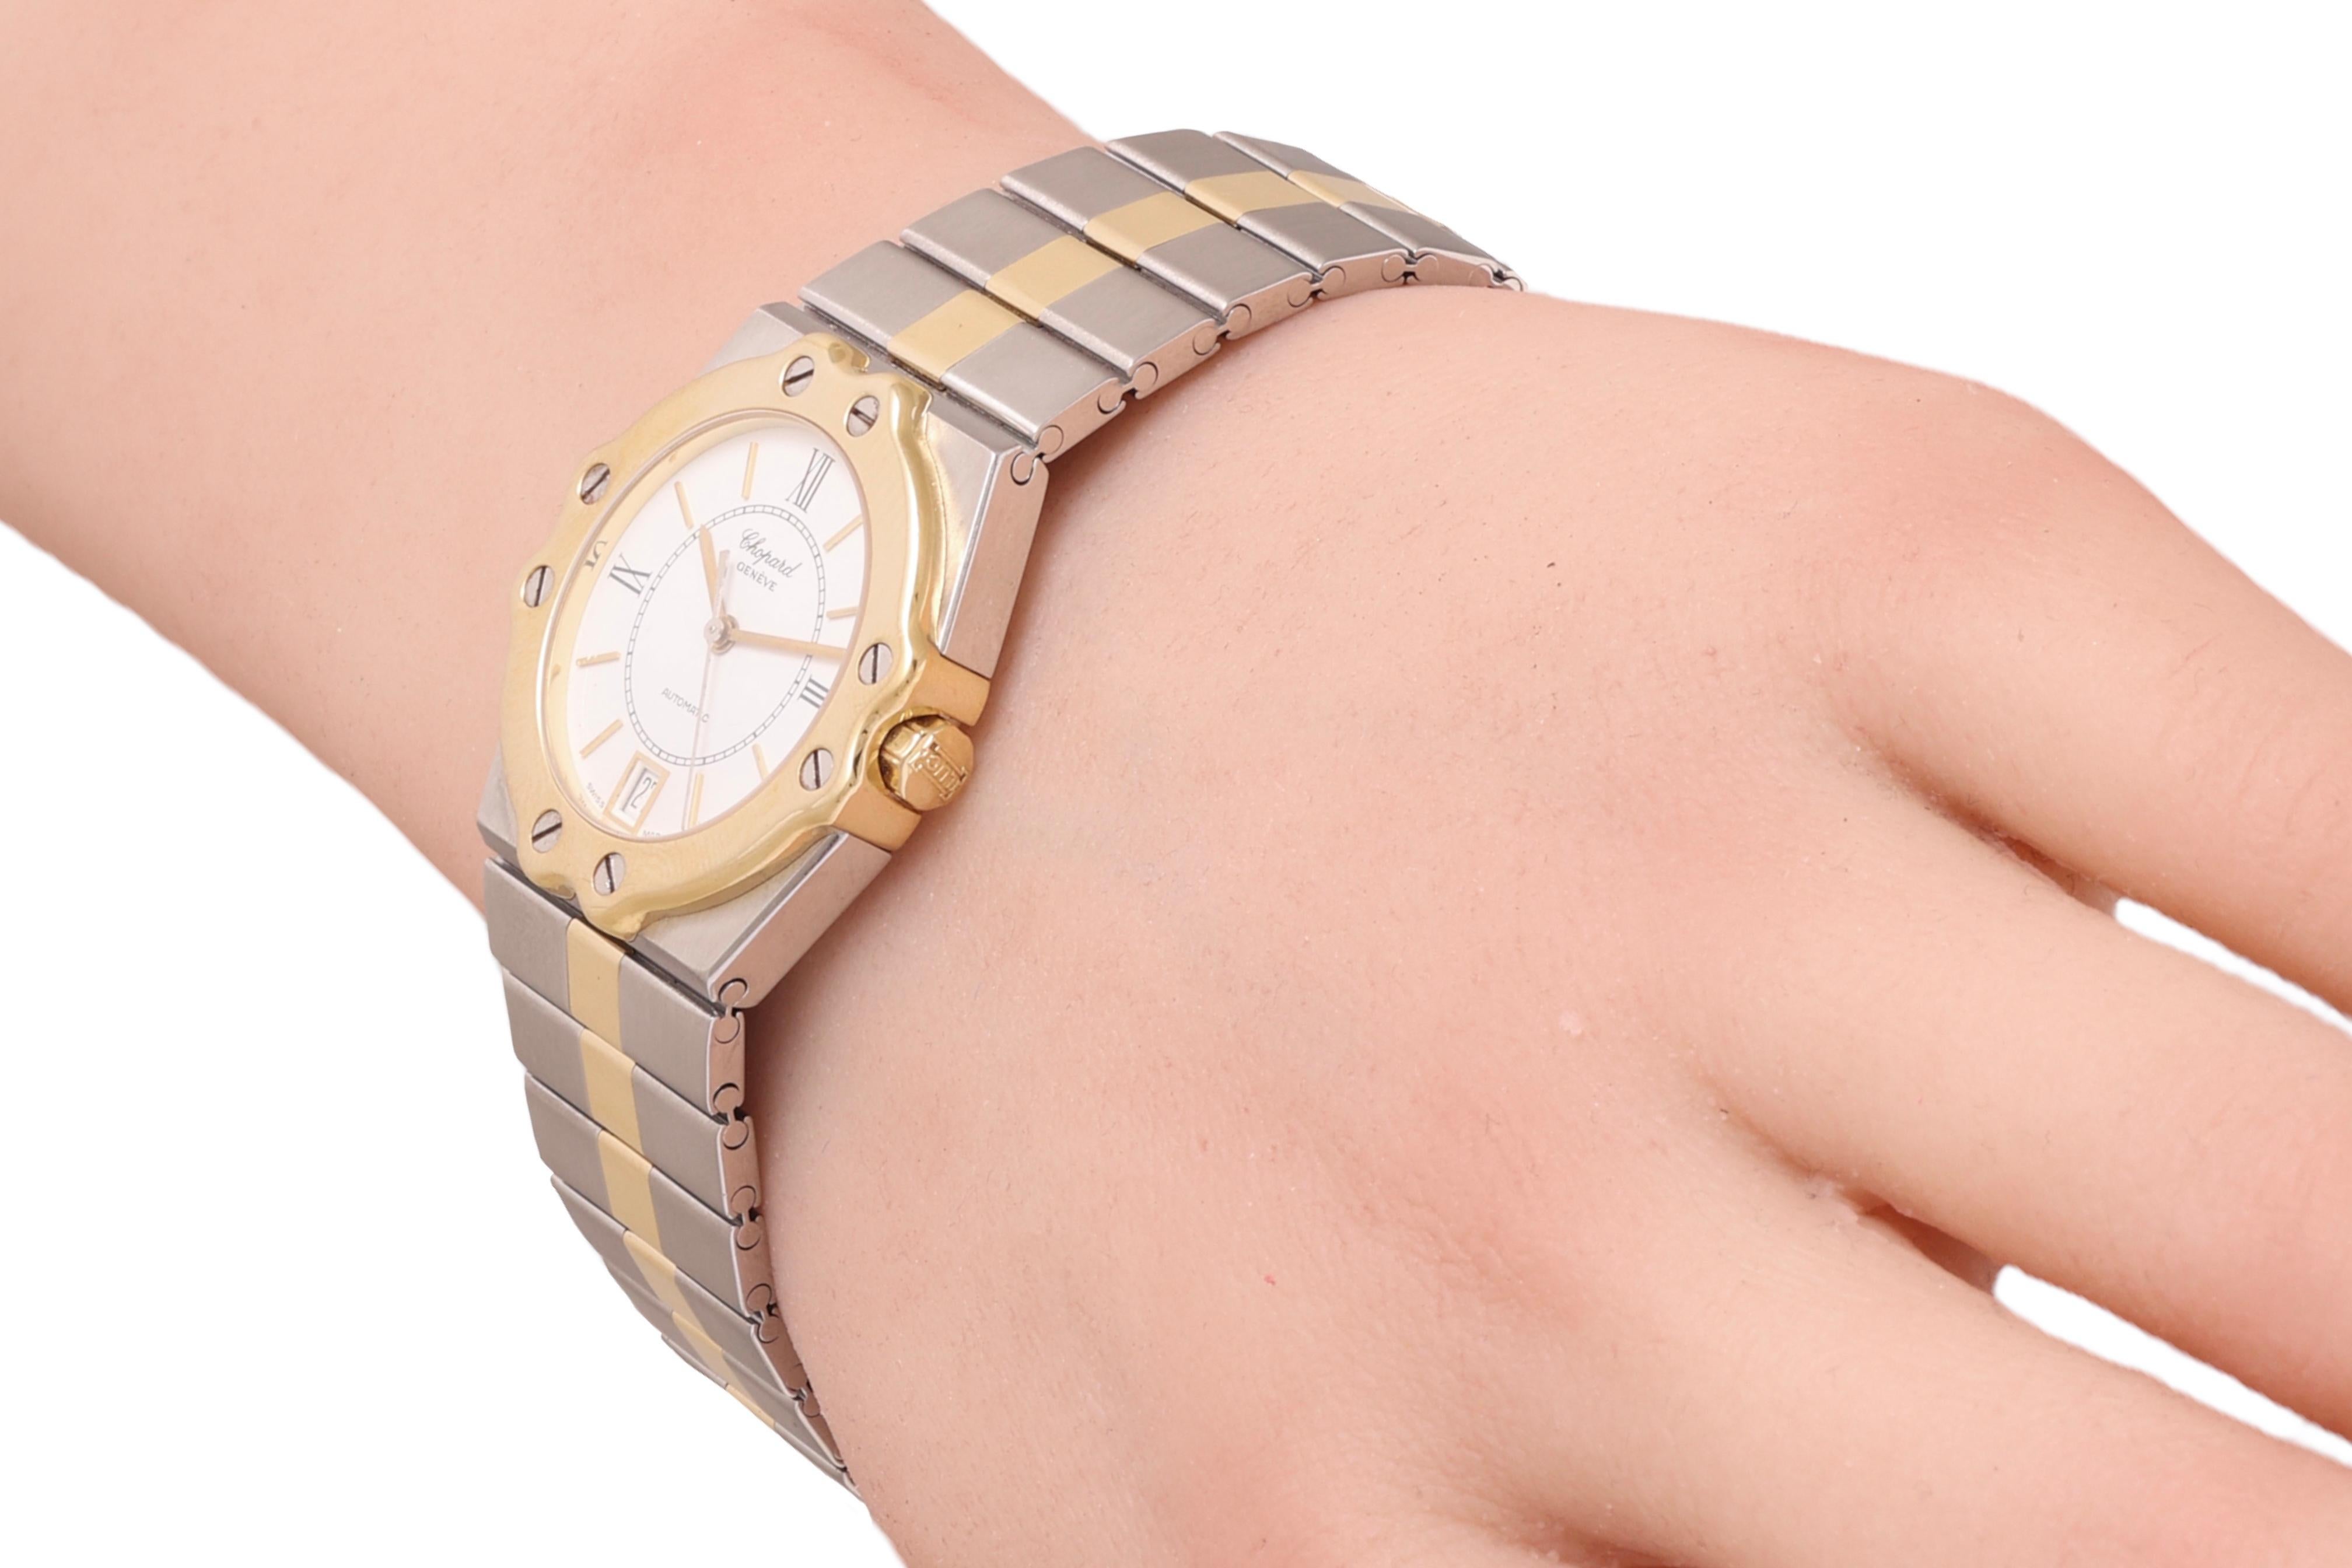 Gold & Steel Chopard St Moritz Automatic Wrist Watch For Sale 6